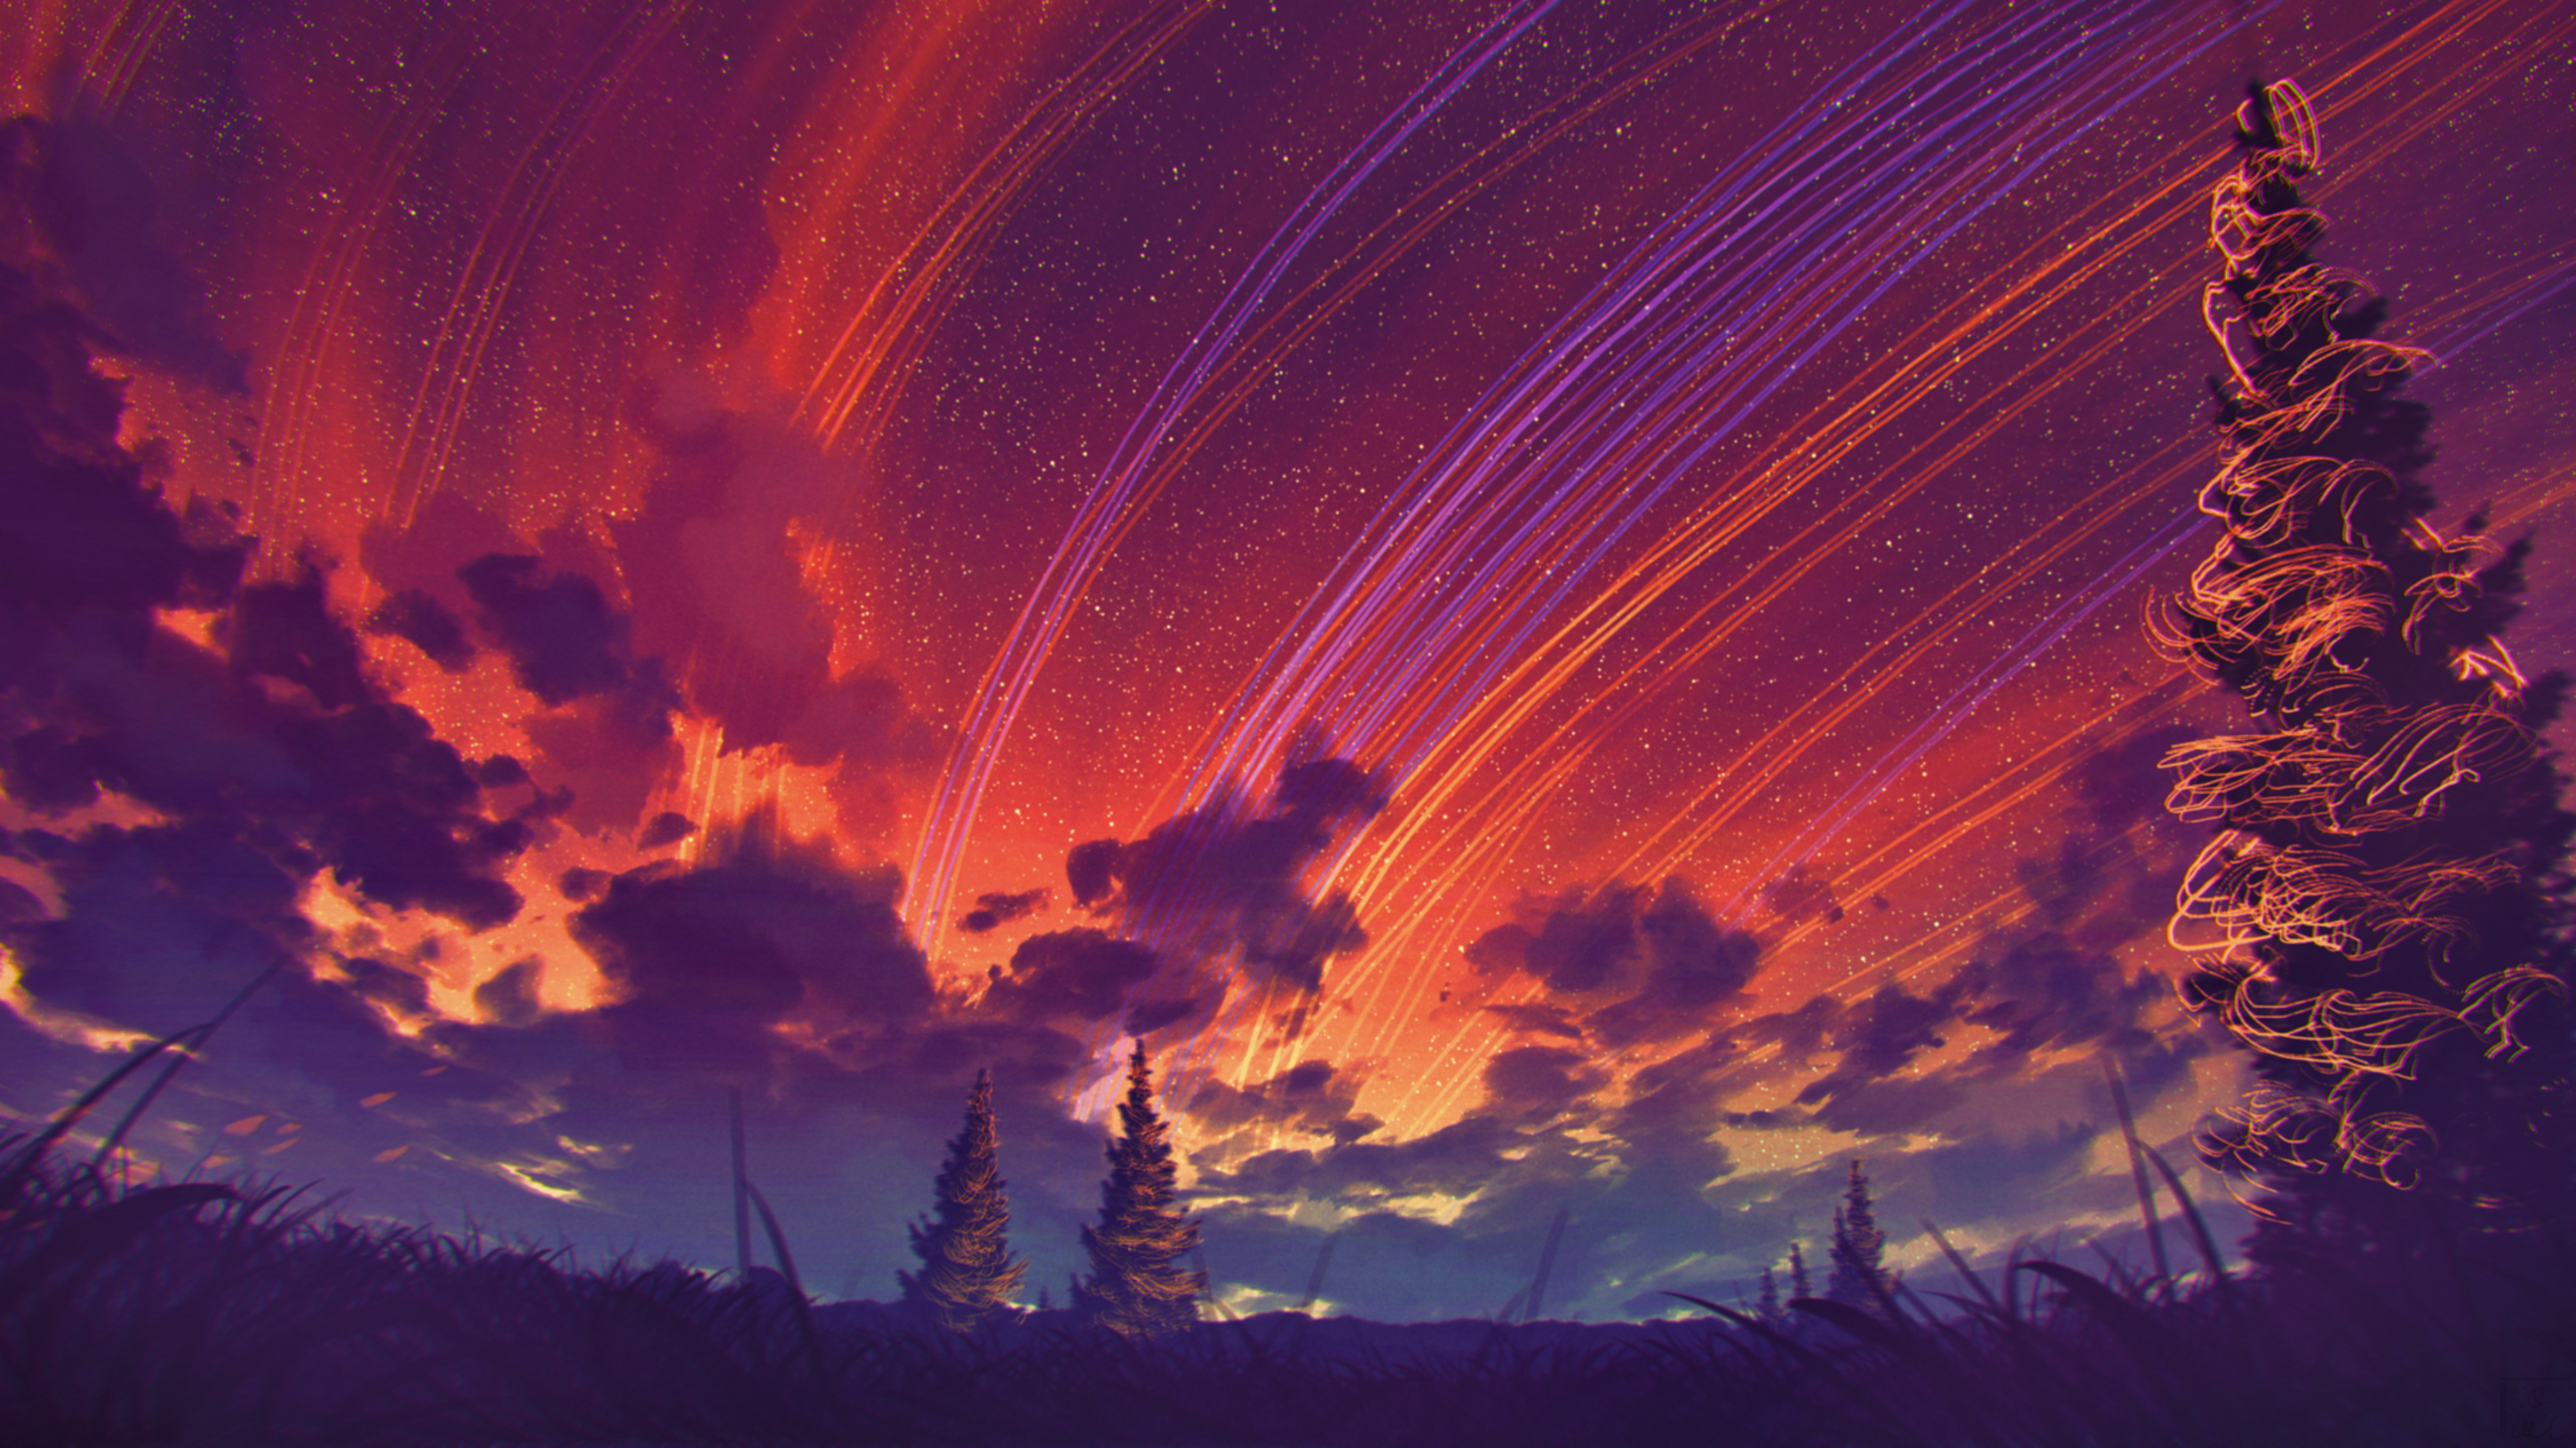 Anime Sky Picture by Elizabeth Miloecute